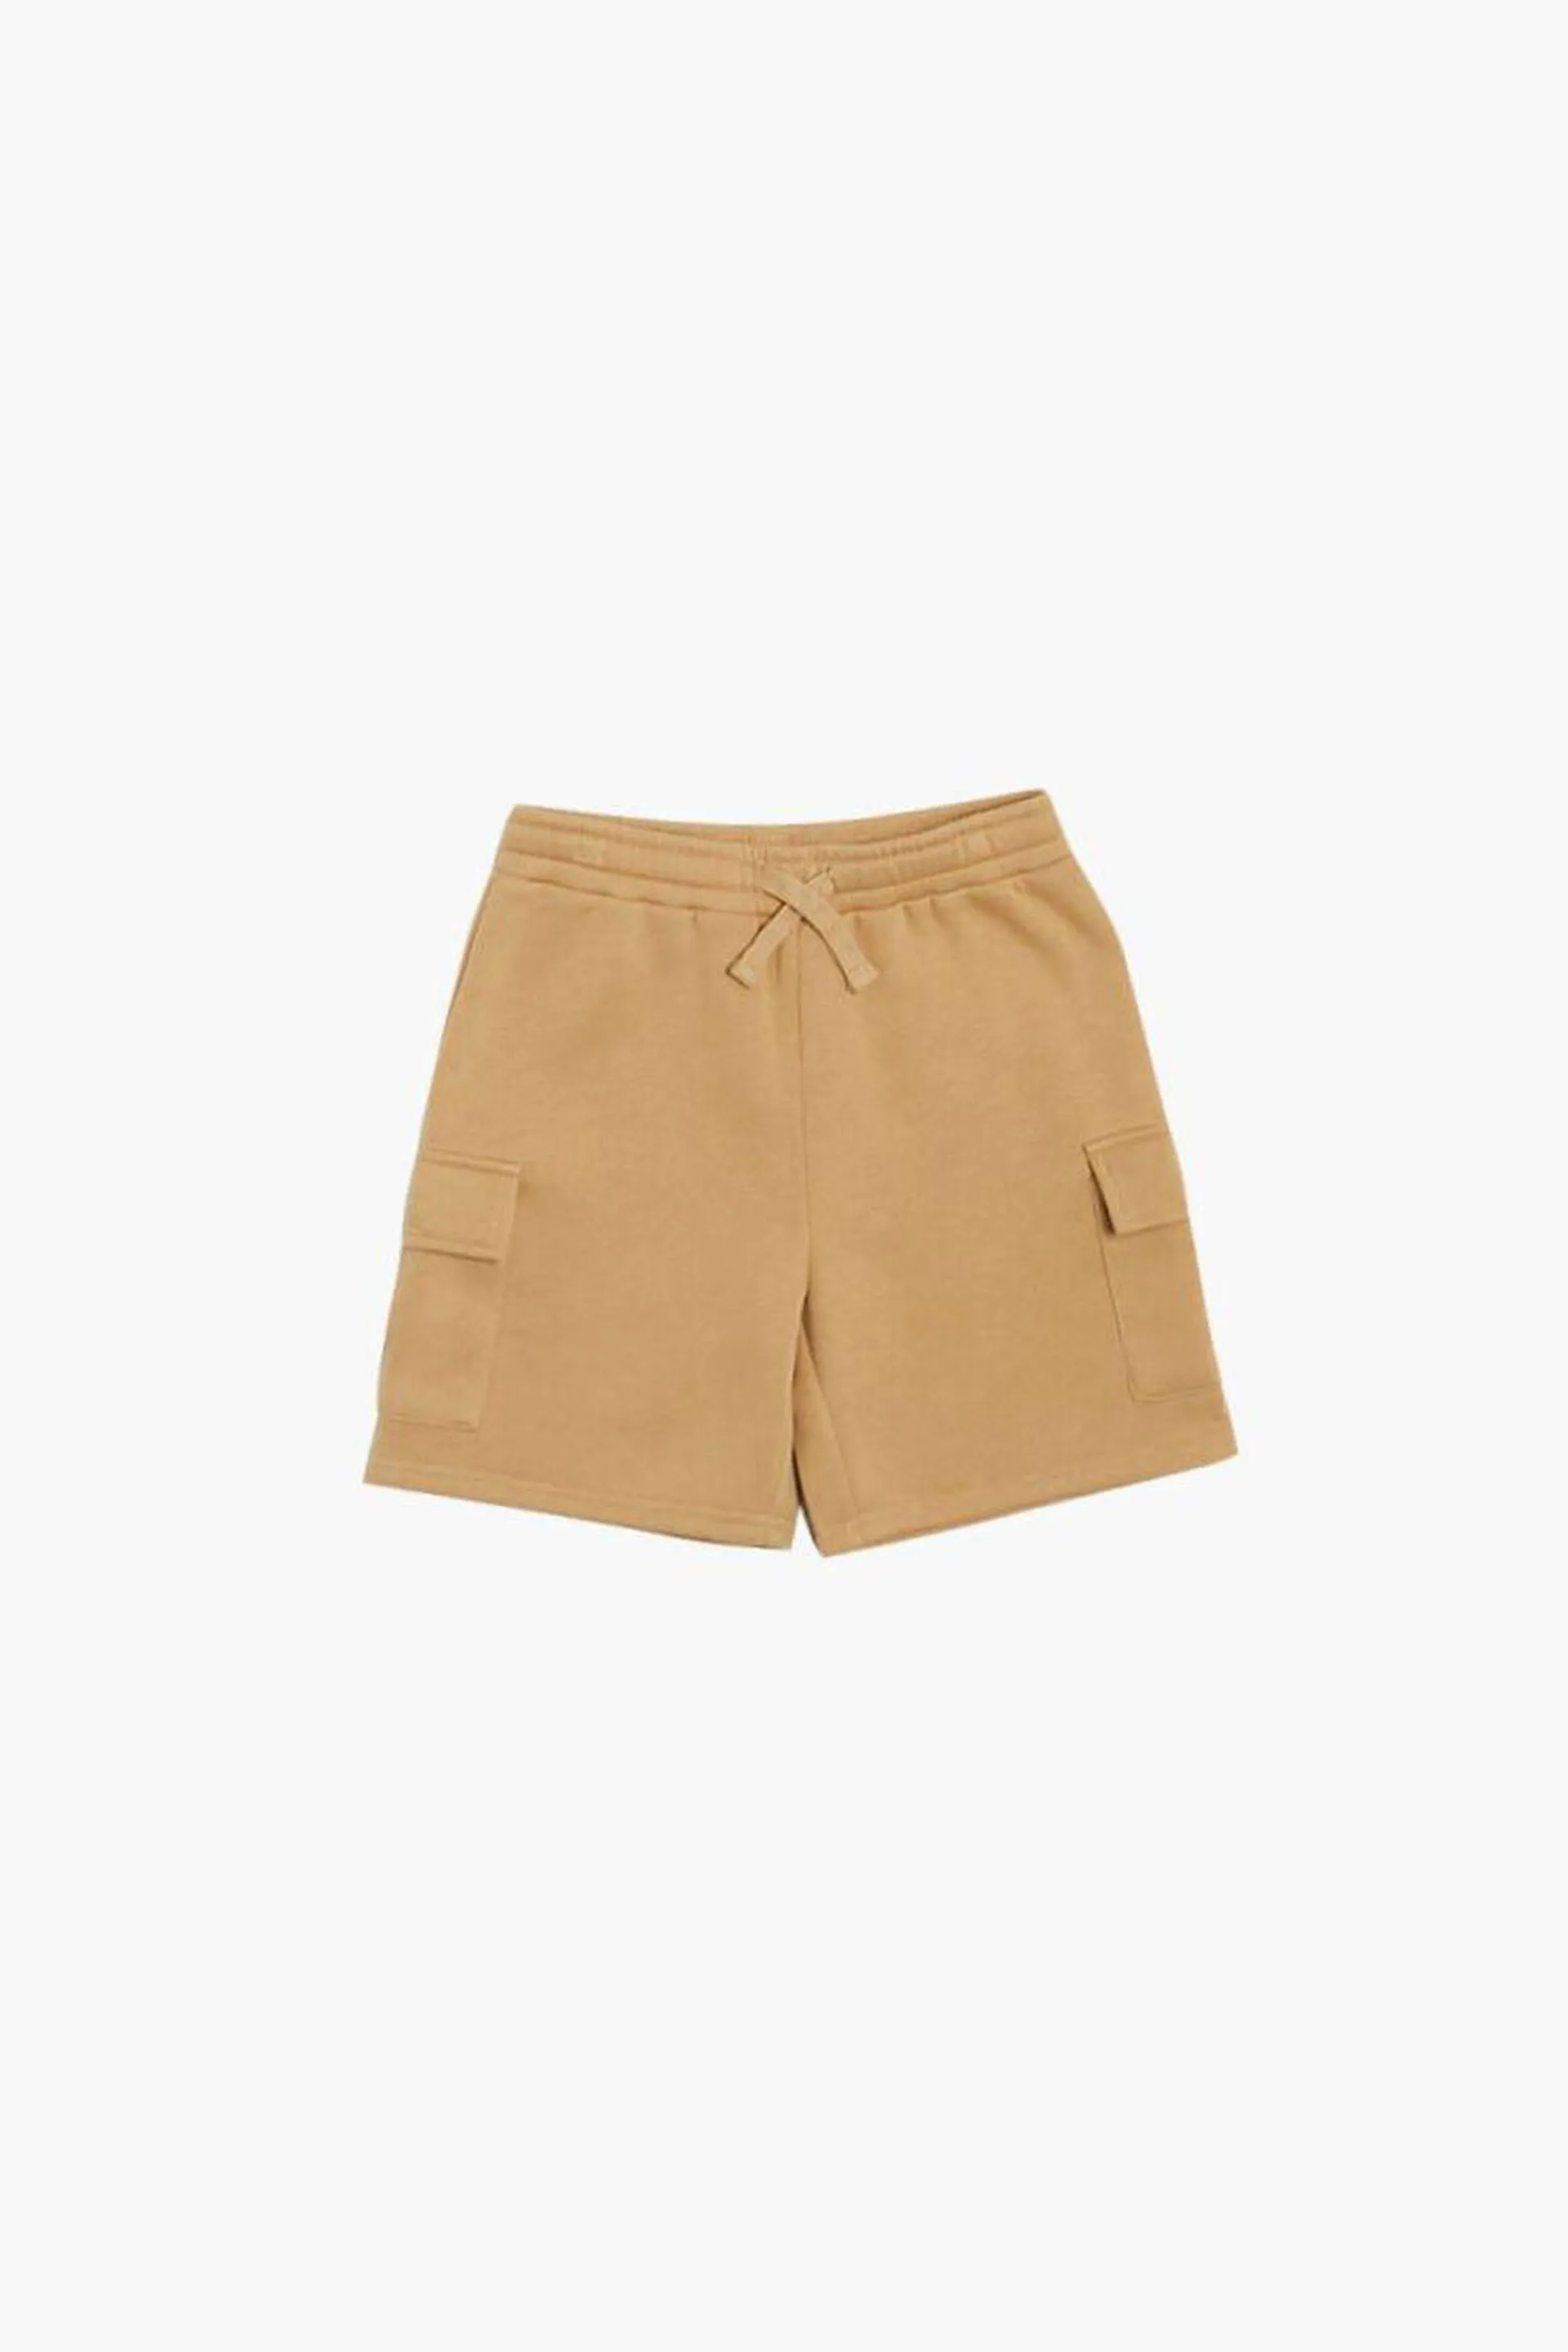 Kids Fleece Cargo Shorts (Girls + Boys)